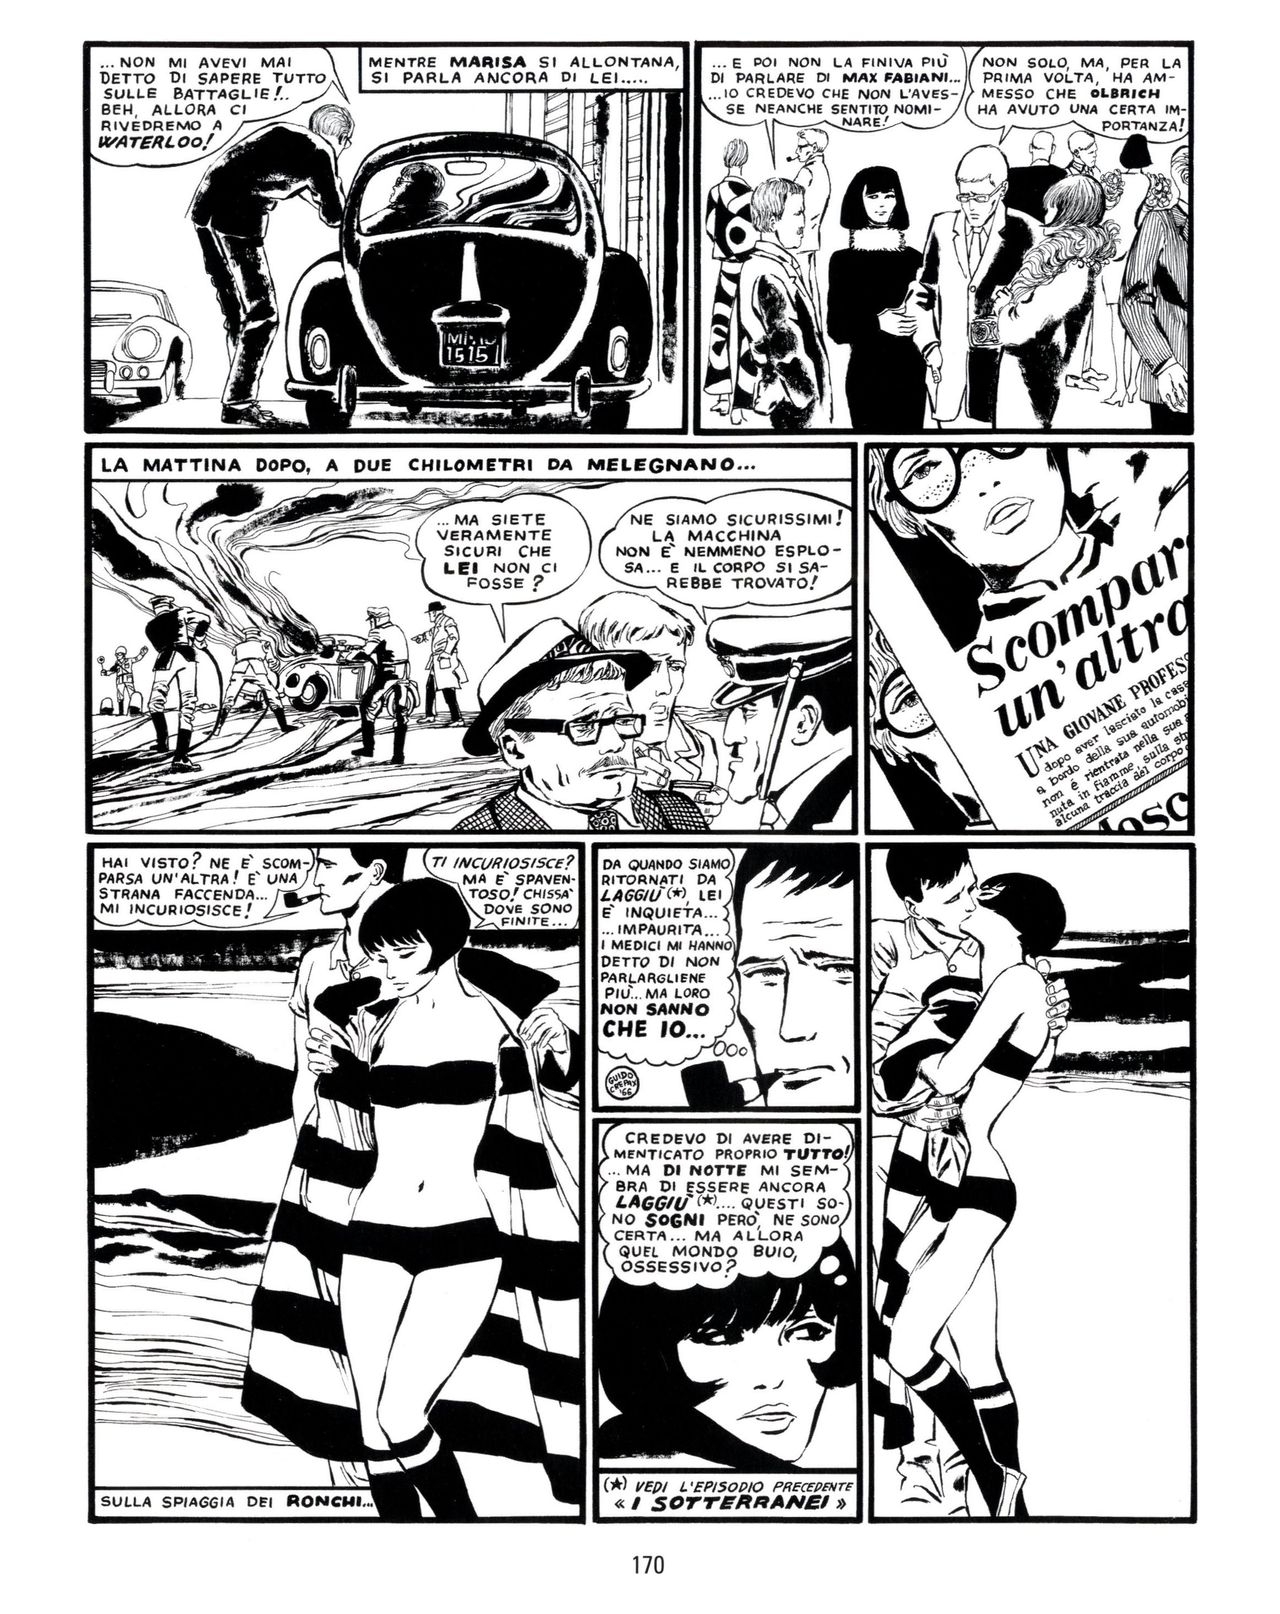 [Guido Crepax] Erotica Fumetti #25 : L'ascesa dei sotterranei : I cavalieri ciechi [Italian] 171